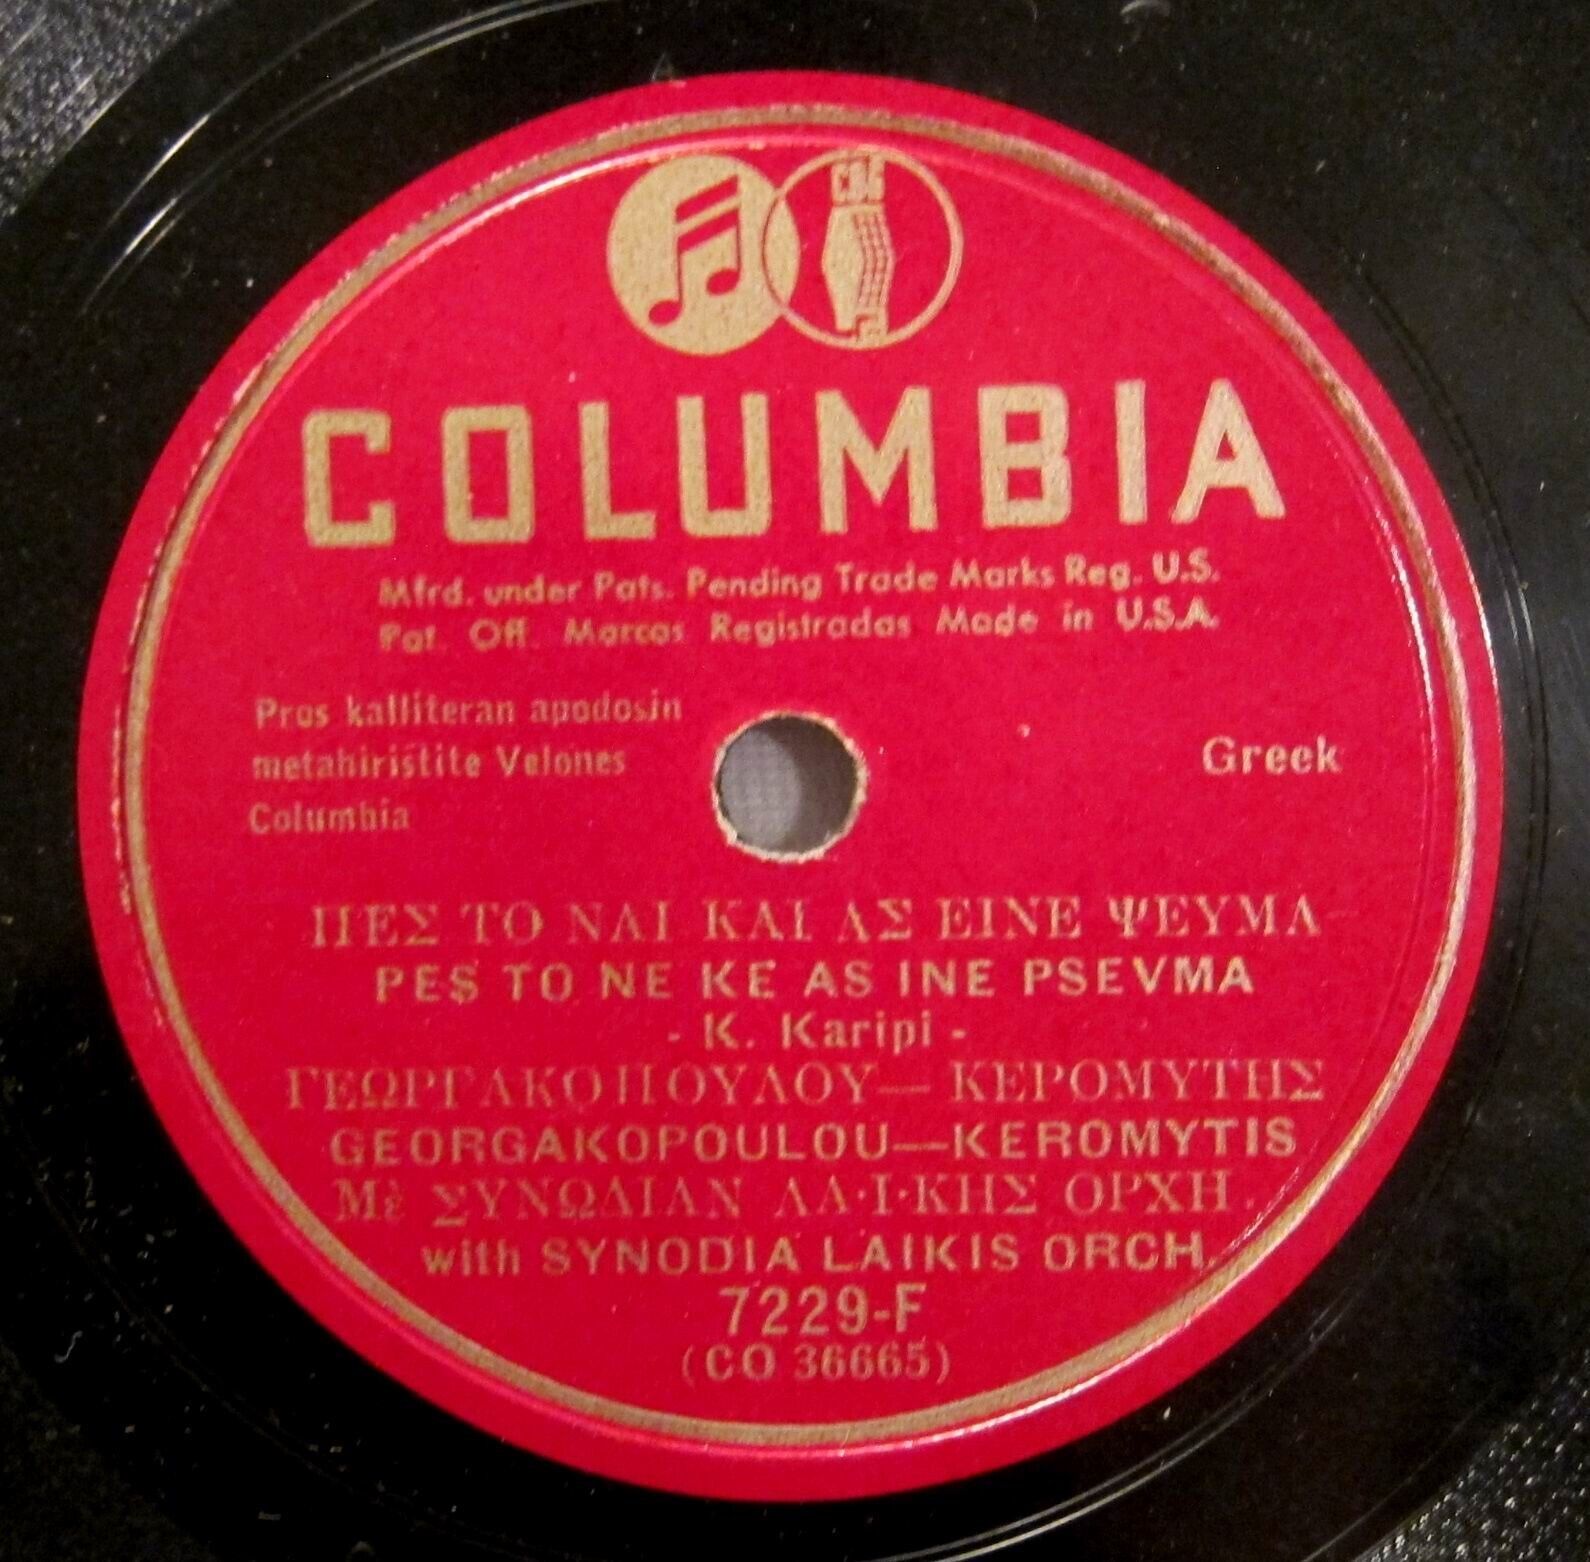 RARE GREEK COLUMBIA RECORDS COLUMBIA 7229-F Georgakopoulou and Keromytis 78 RPM